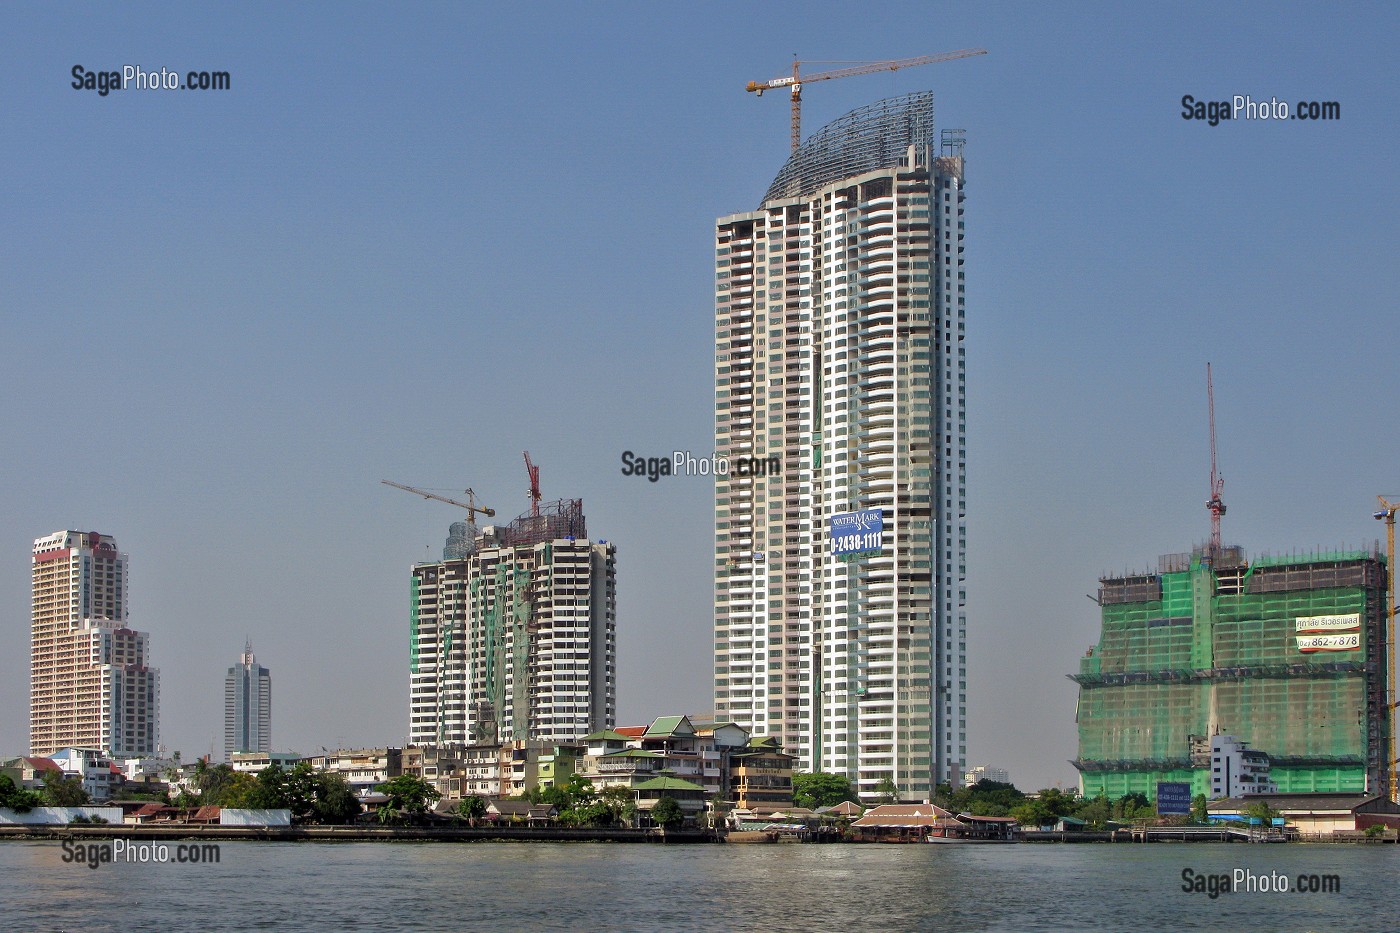 BUILDINGS, IMMEUBLES EN CONSTRUCTION SUR LES RIVES DE LA RIVIERE CHAO PHRAYA, BANGKOK, THAILANDE 